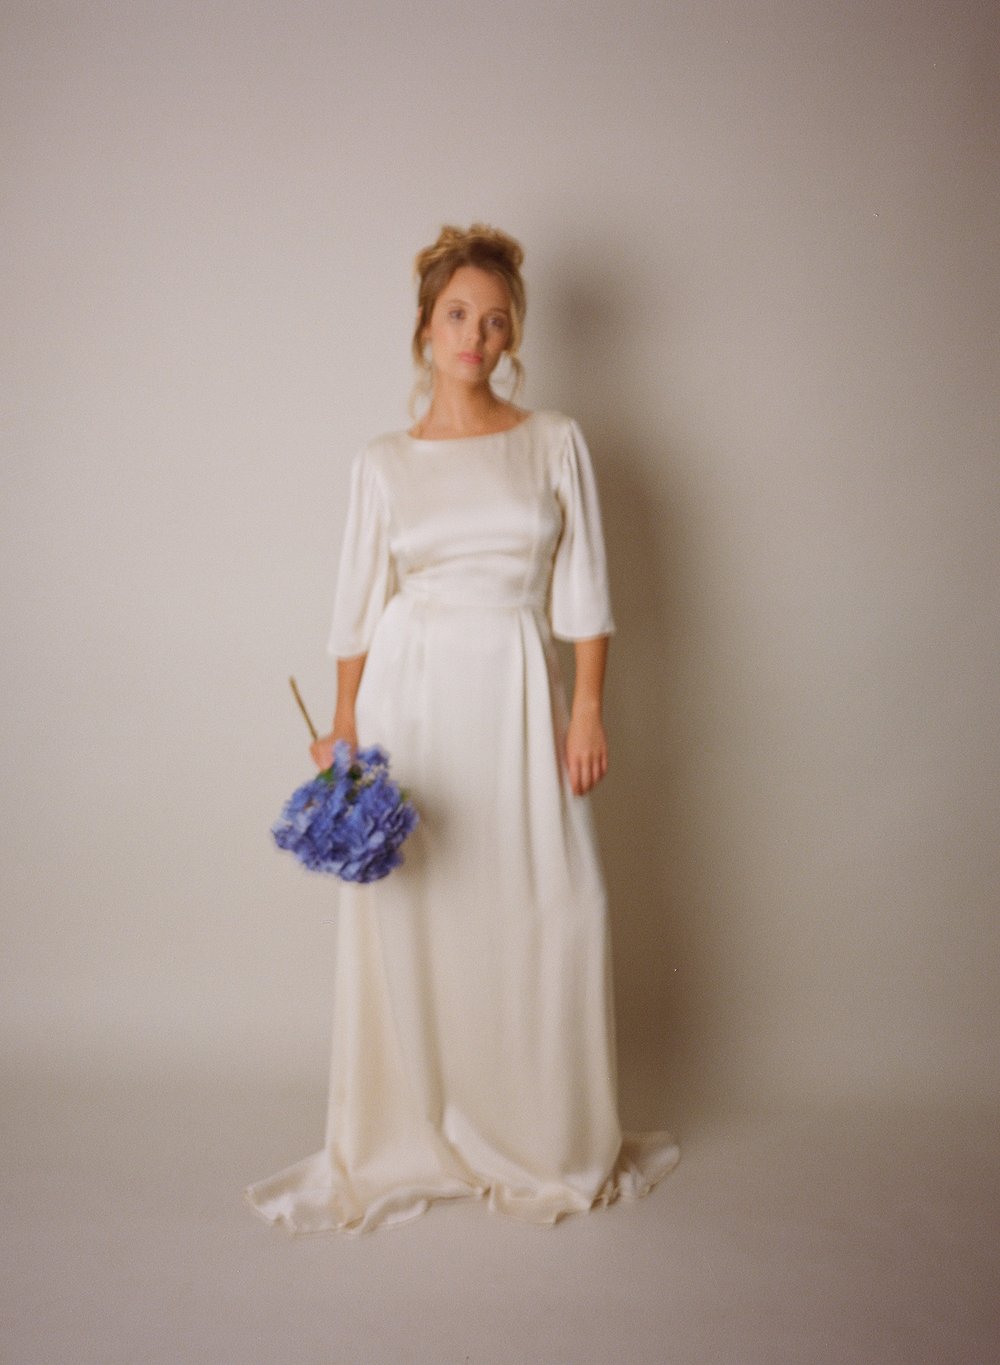 Analogue-shoot-Hollie-Cornish-photographer-Kate-Beaumont-wedding-gowns-Sheffield-64.jpg